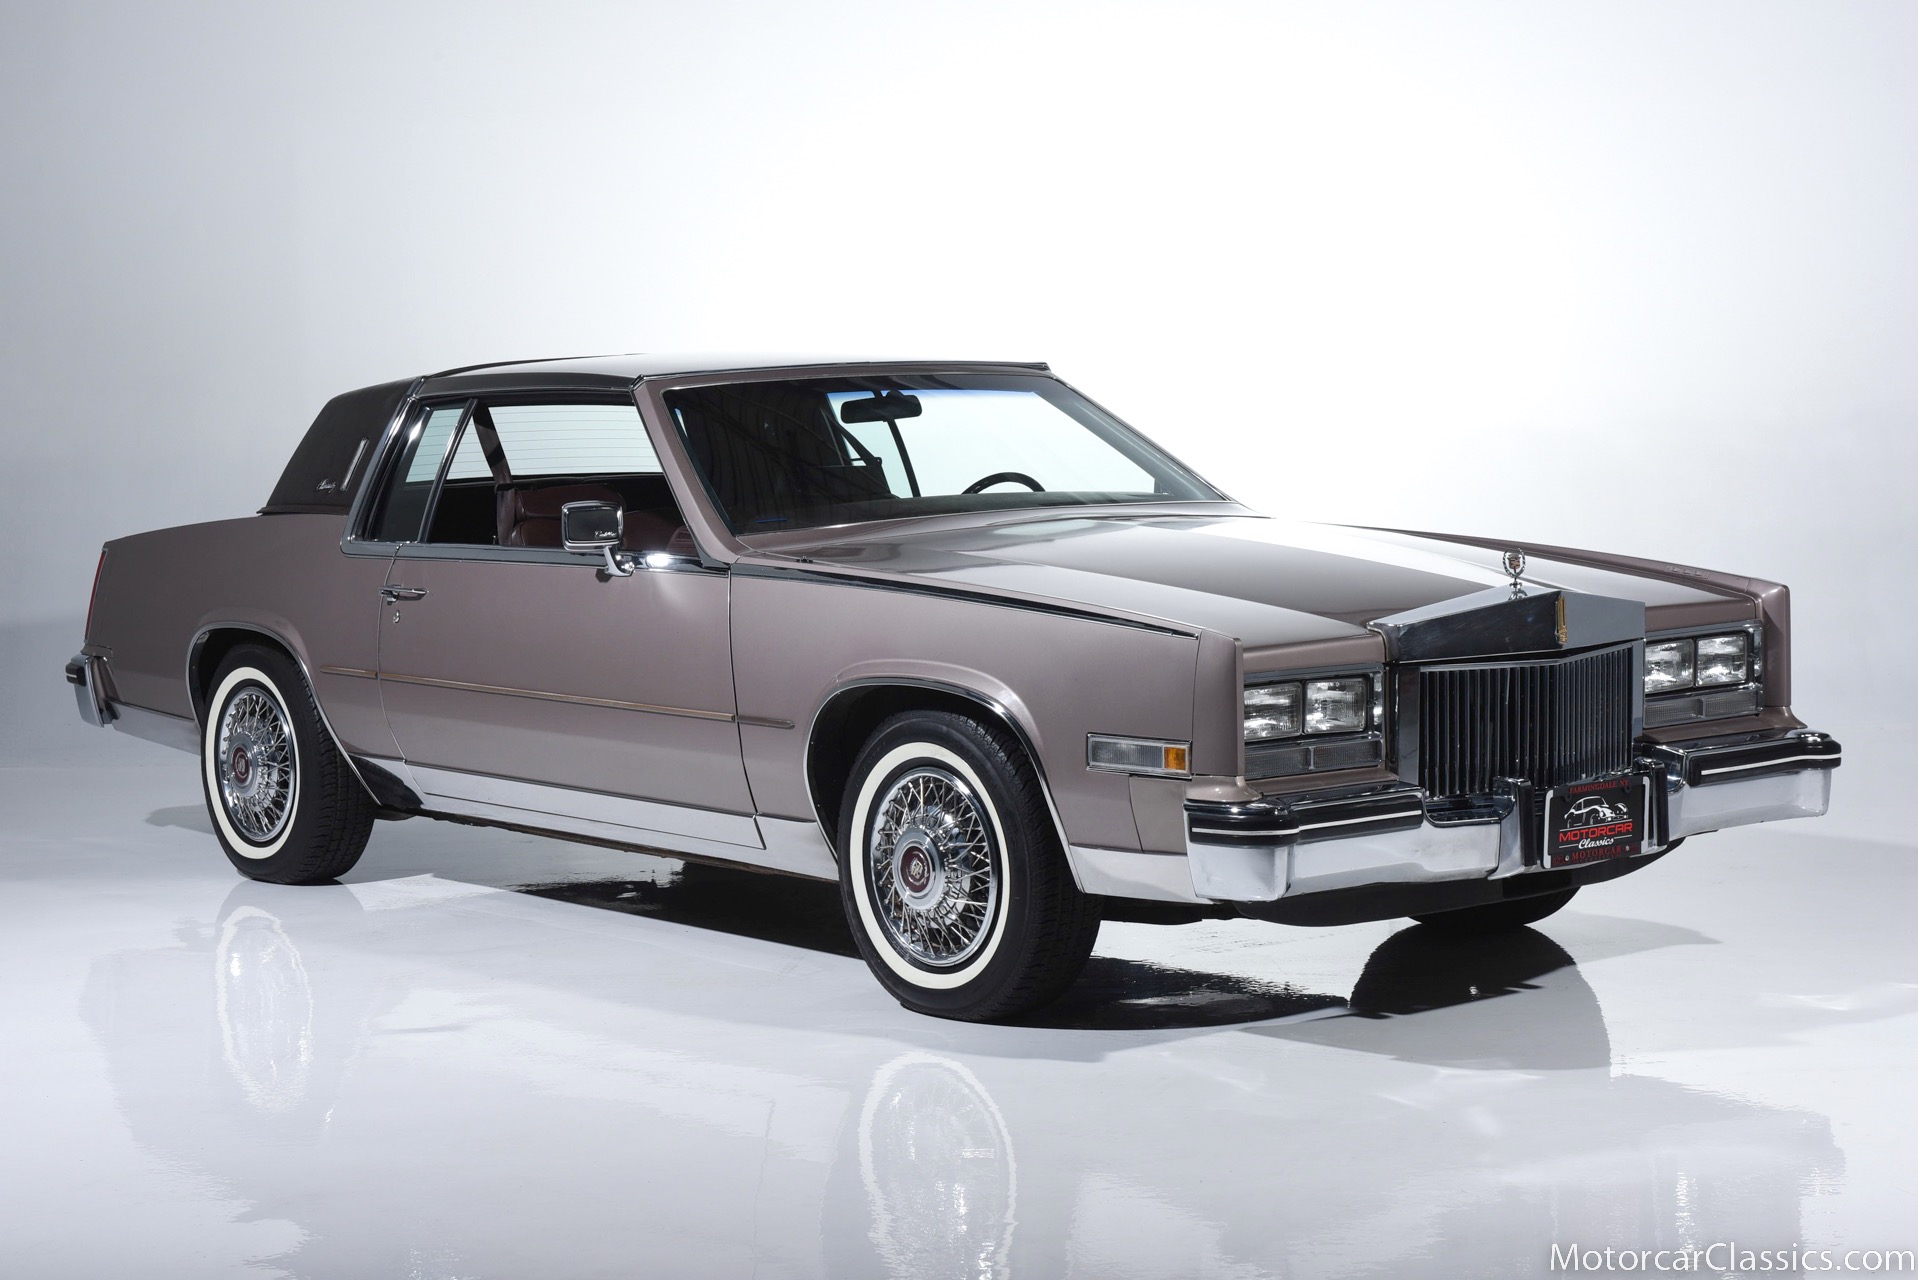 Used 1984 Cadillac Eldorado For Sale ($24,900) | Motorcar Classics Stock  #2185